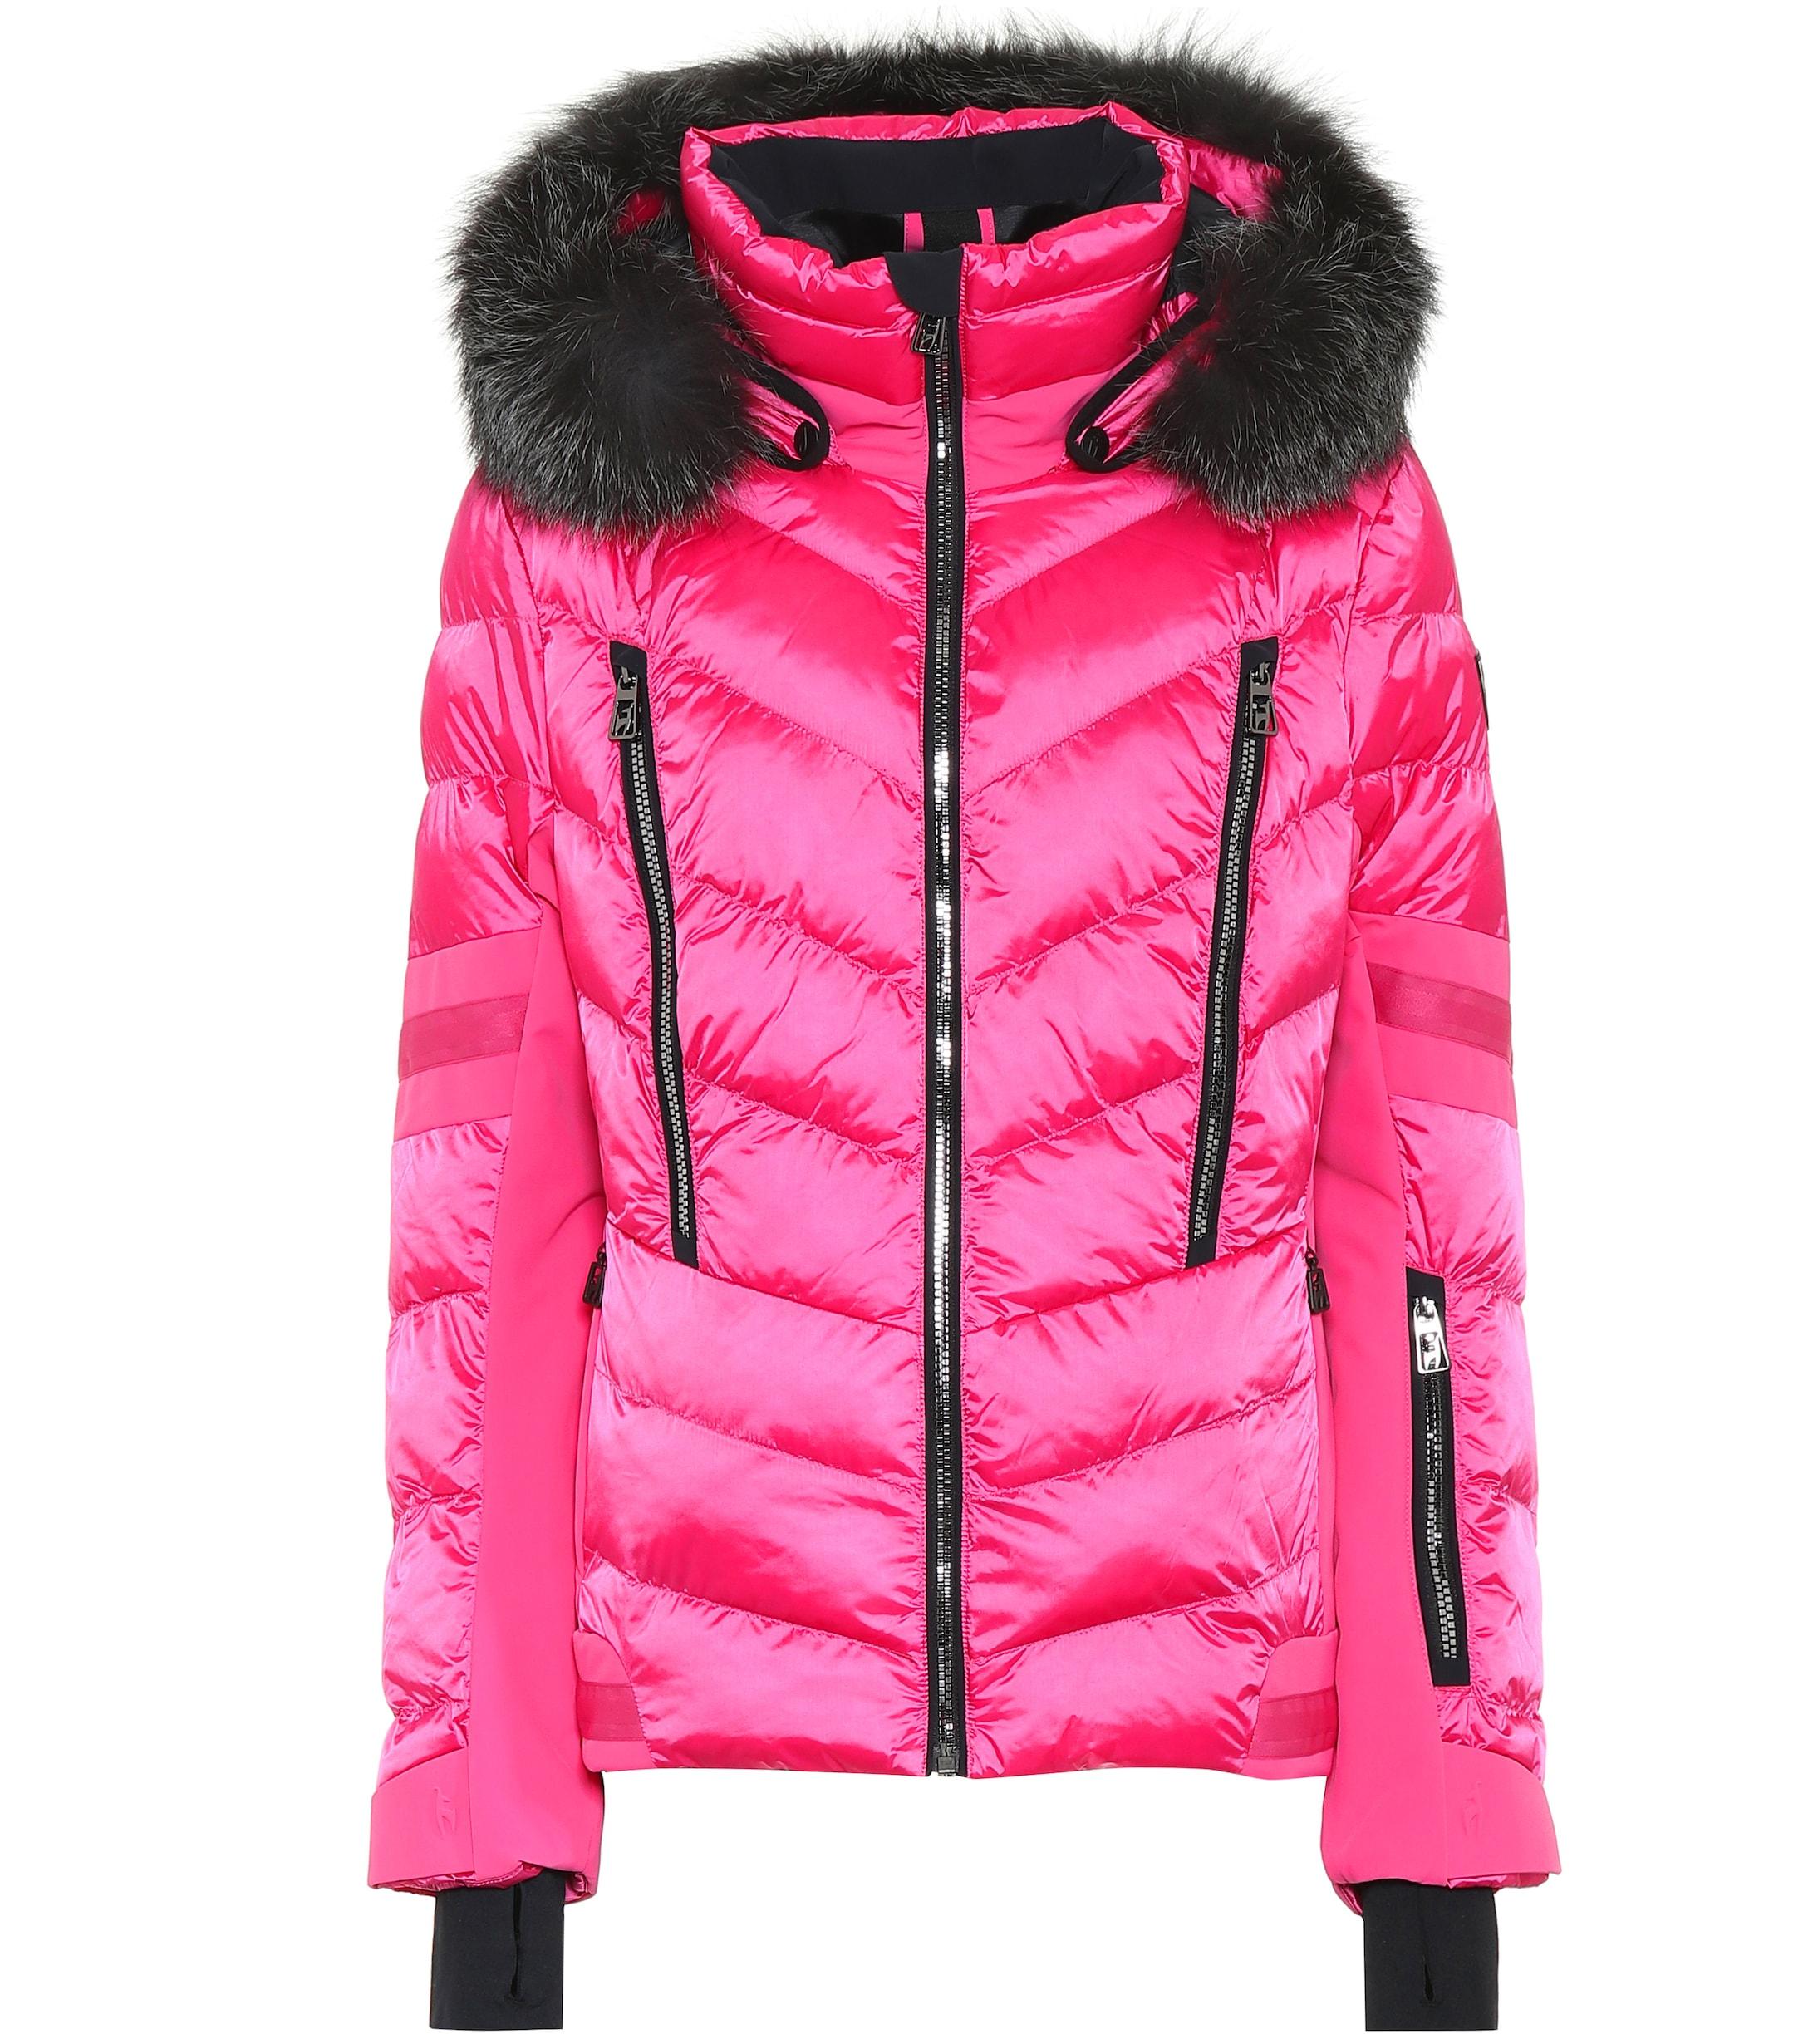 Toni Sailer Nele Splendid Fur-trimmed Ski Jacket in Pink - Lyst